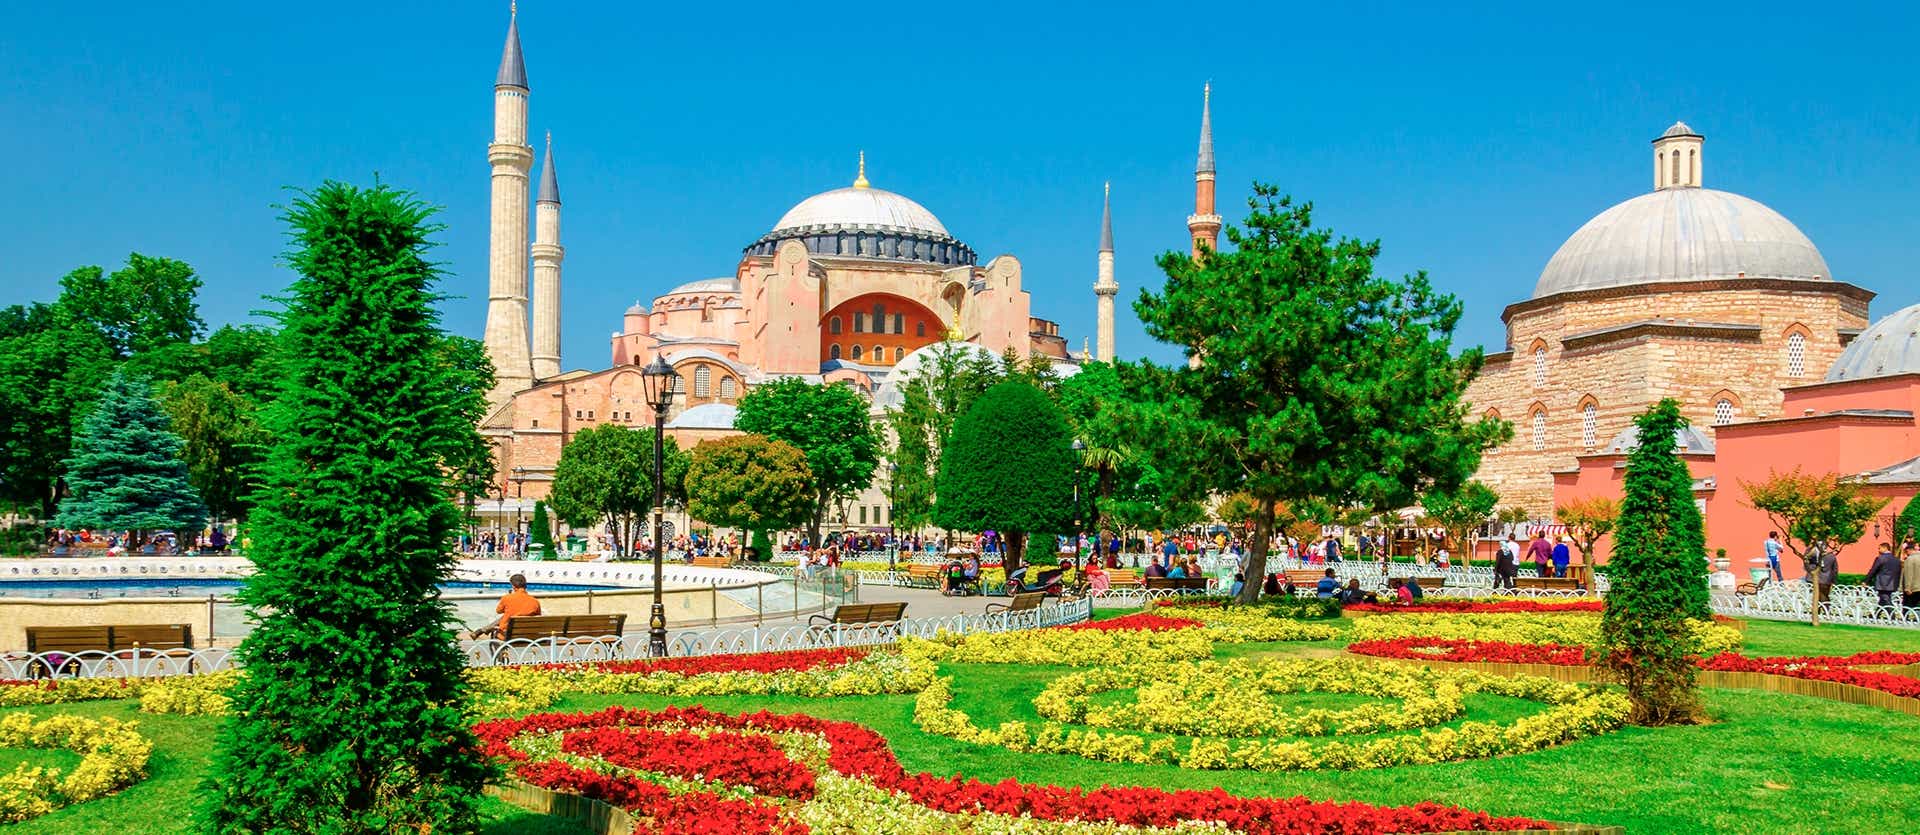 Hagia Sophia Mosque <span class="iconos separador"></span> Istanbul <span class="iconos separador"></span> Turkey